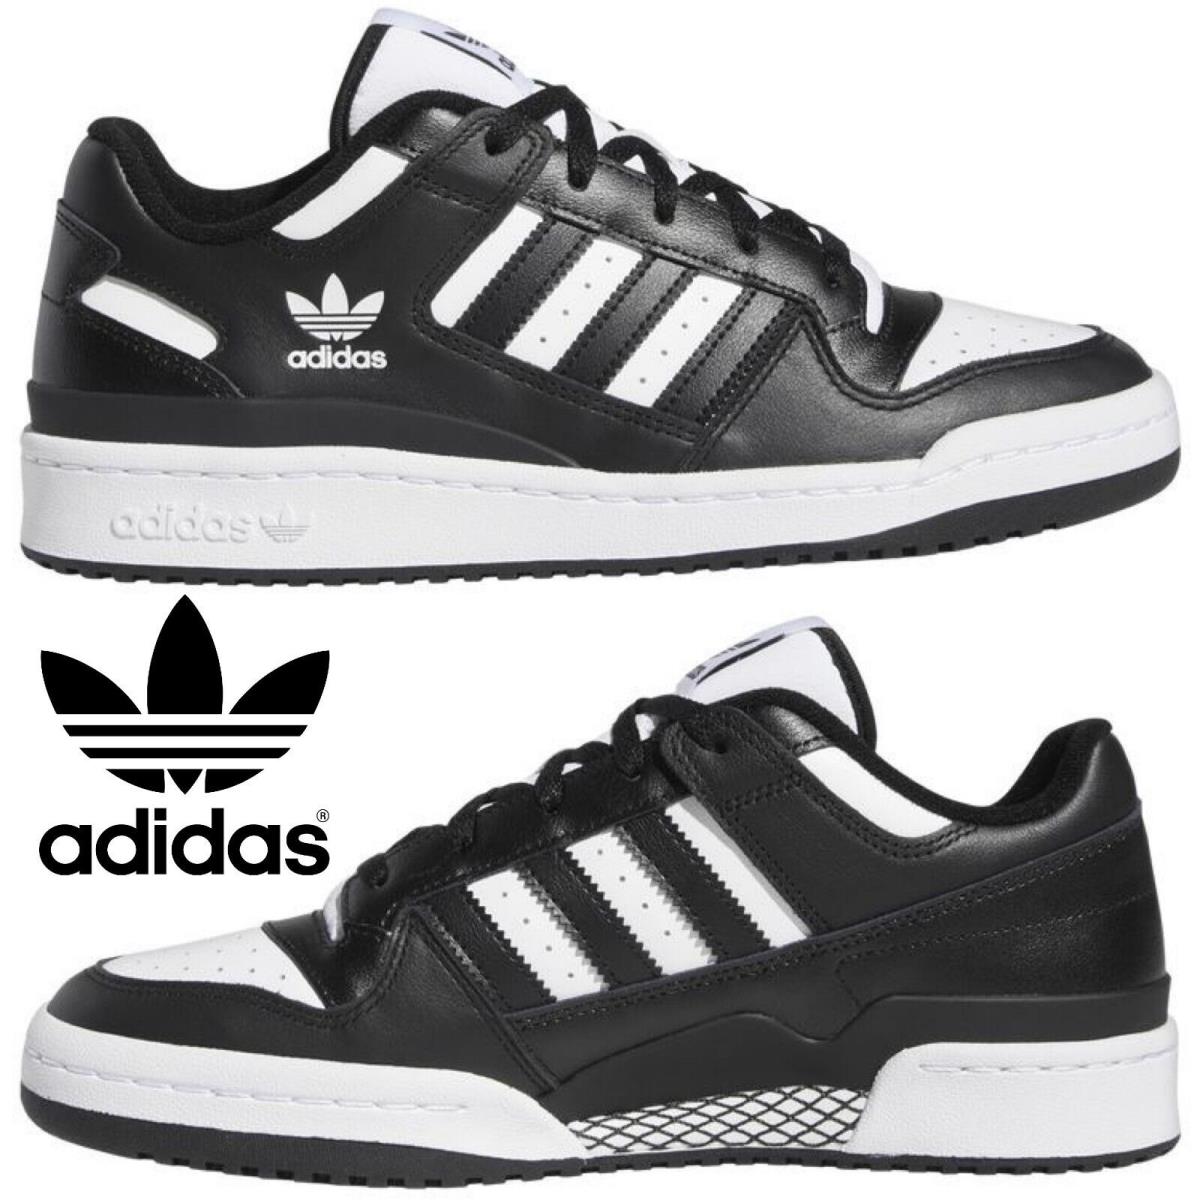 Adidas Originals Forum Low Men`s Sneakers Comfort Sport Casual Shoes Black White